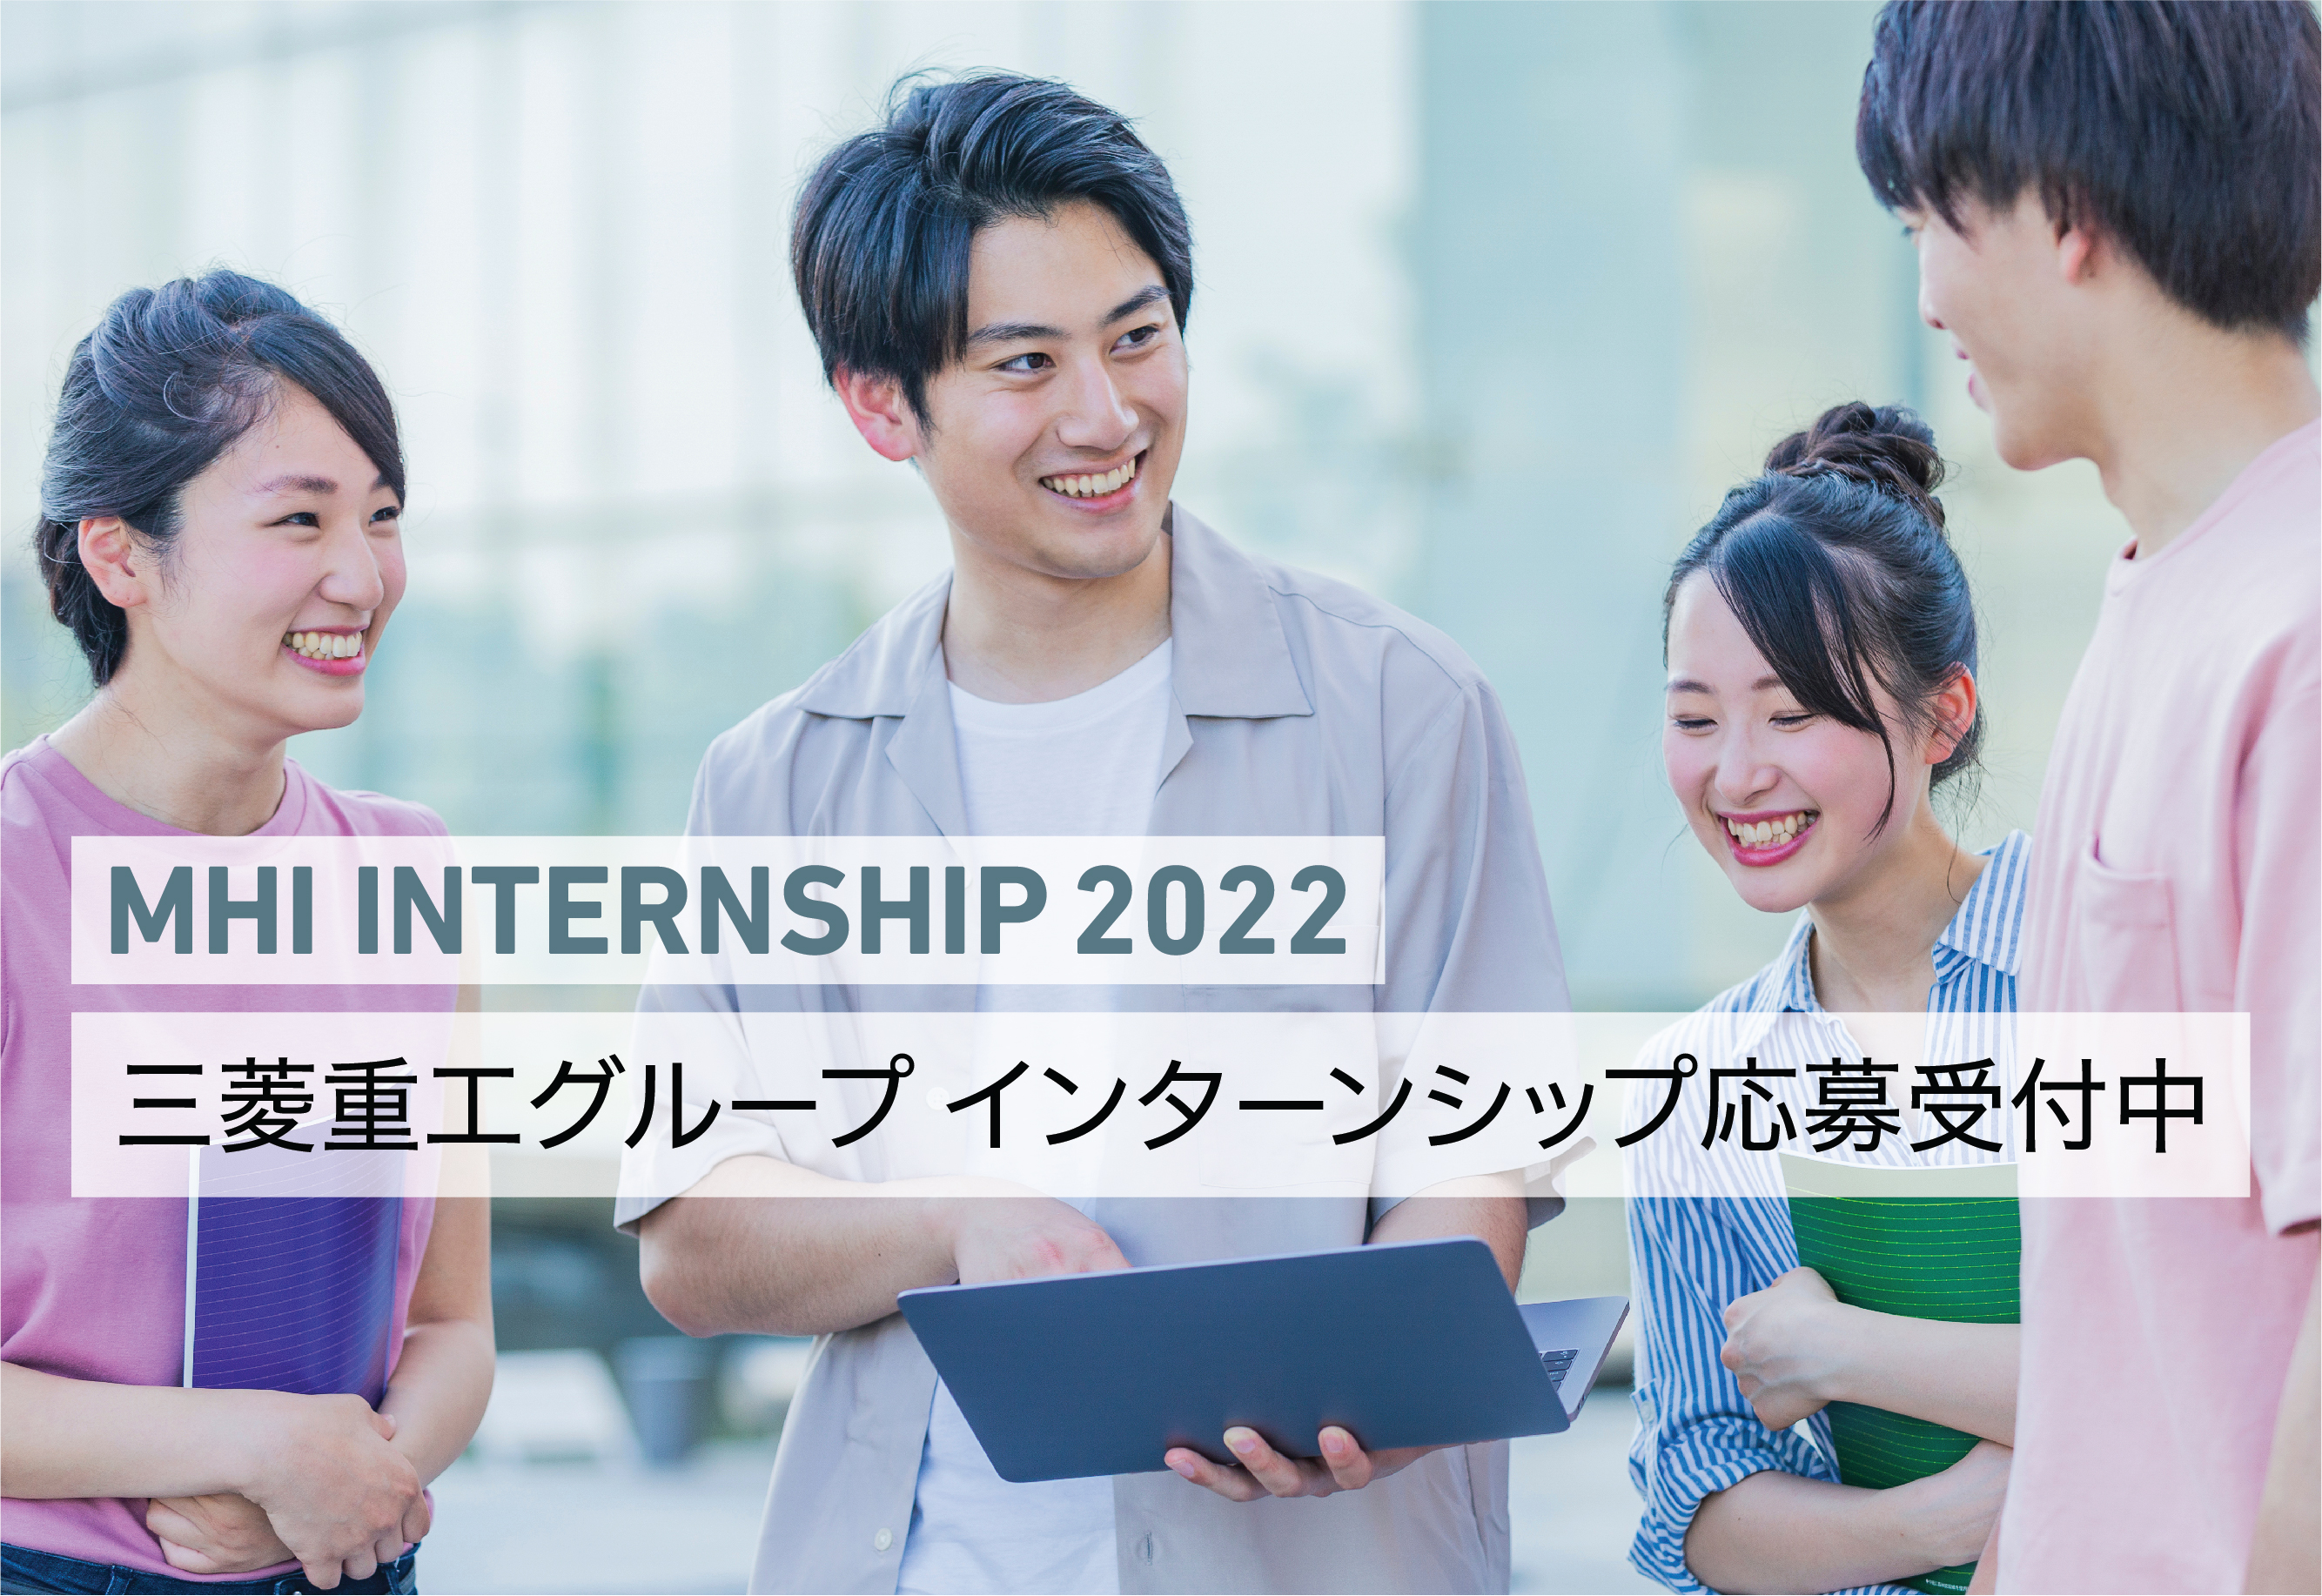 Internship 2022